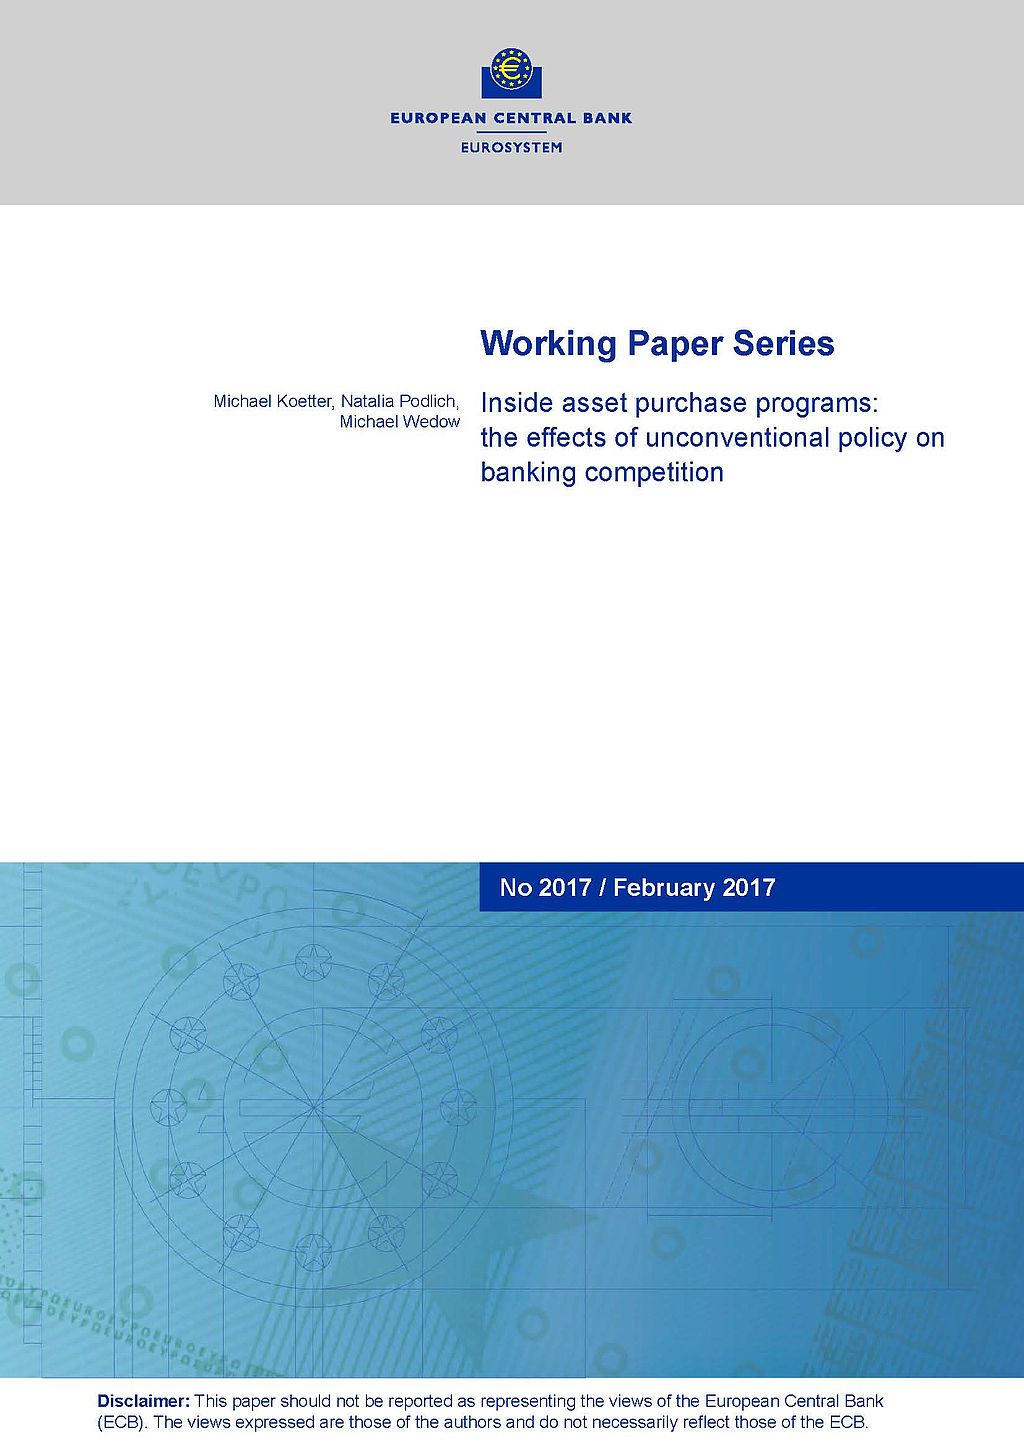 cover_ECB-Working-Paper-Series_2017-feb.jpg